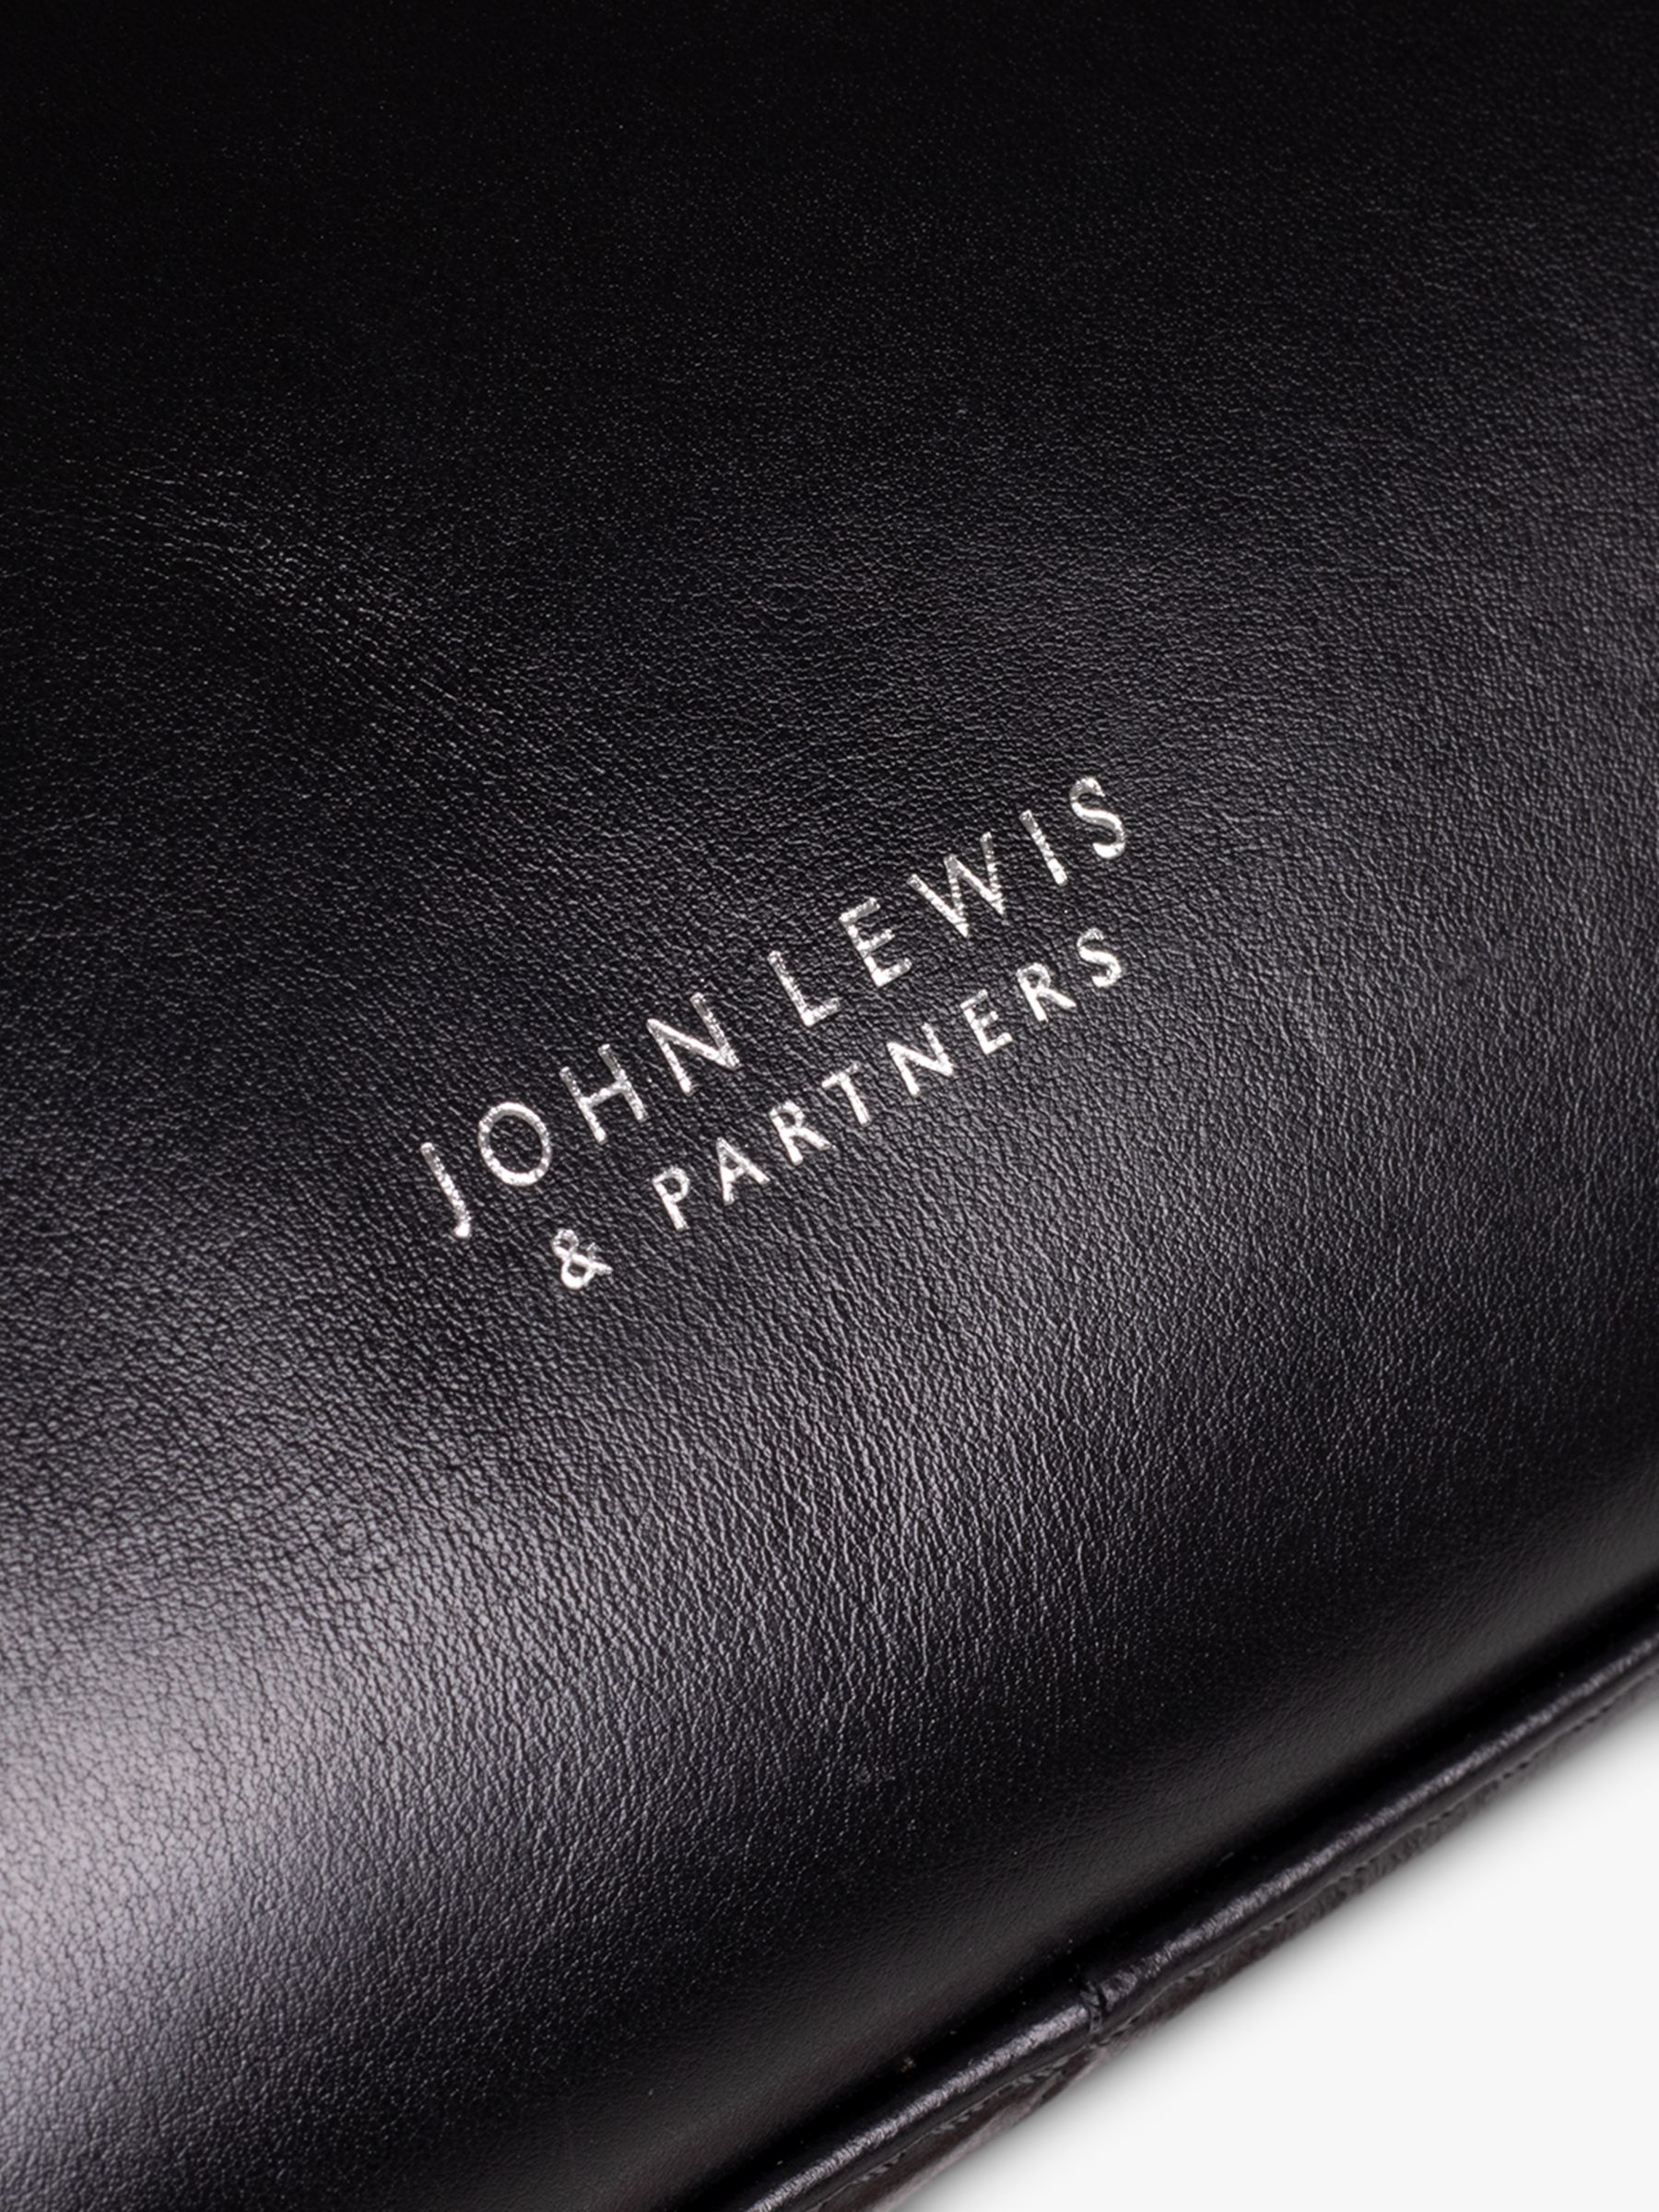 John Lewis Vegetable Tan Leather Wash Bag, Black